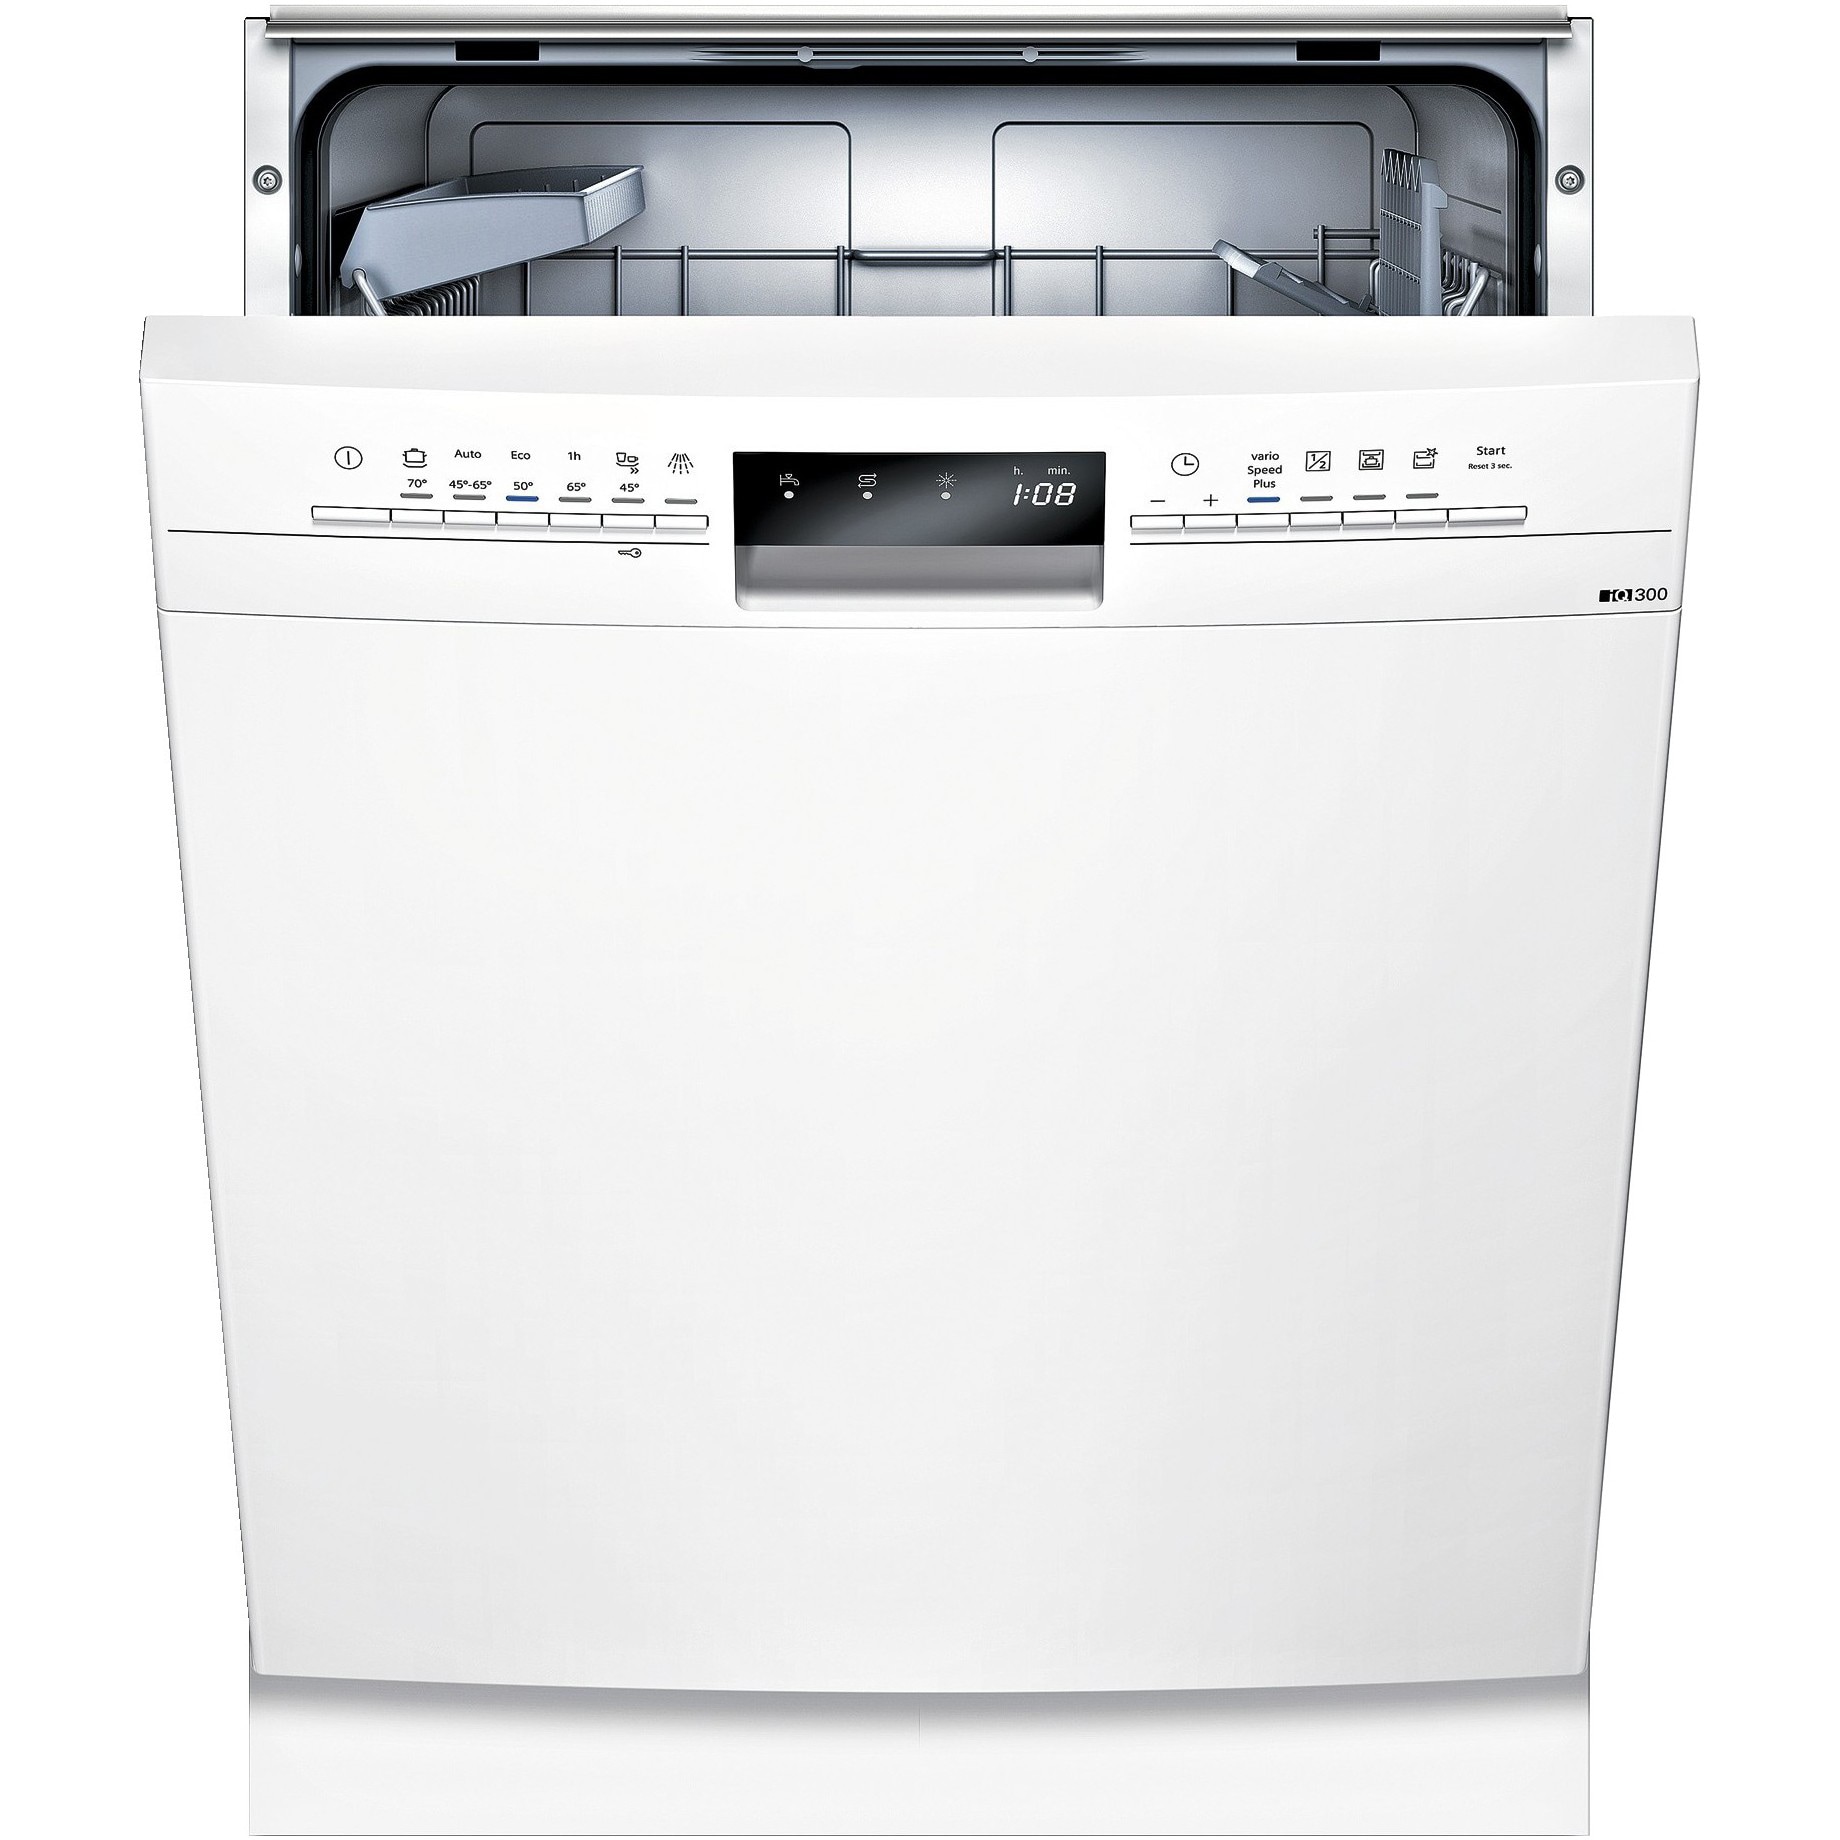 Siemens iQ300 opvaskemaskine SN436W01AS - hvid | Elgiganten